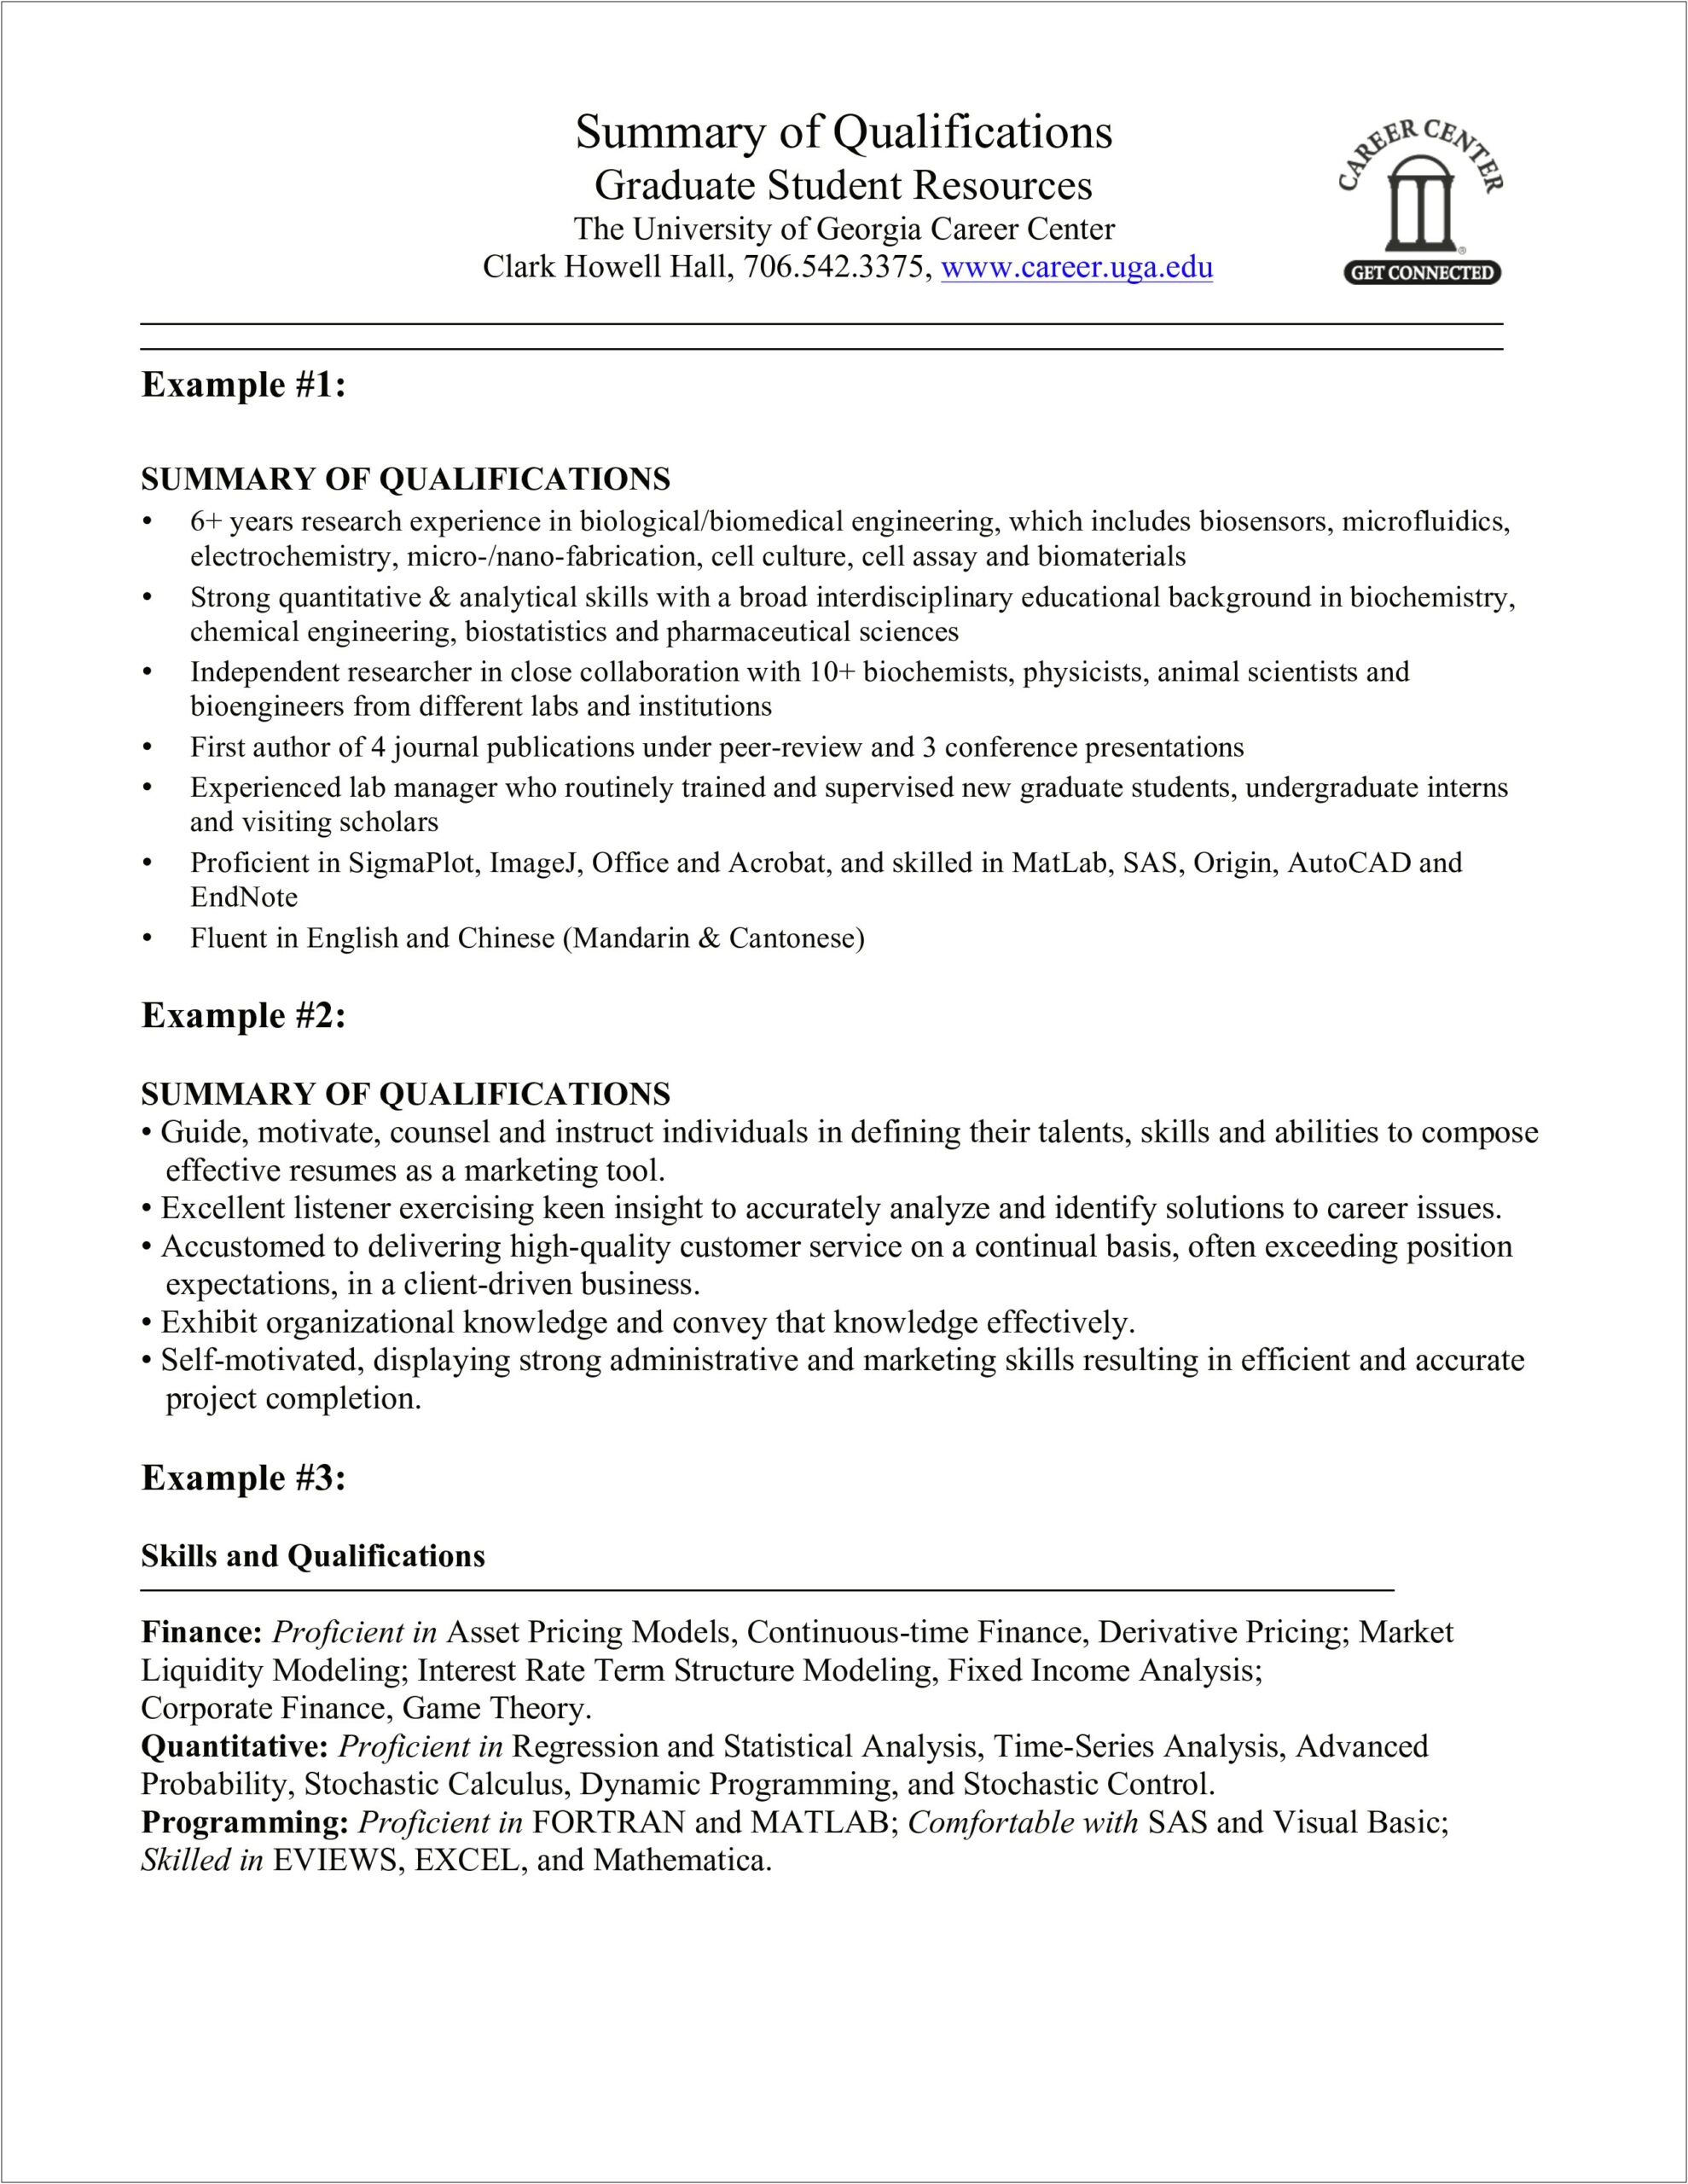 Resume Summary For Graduate Mechanical Engineer